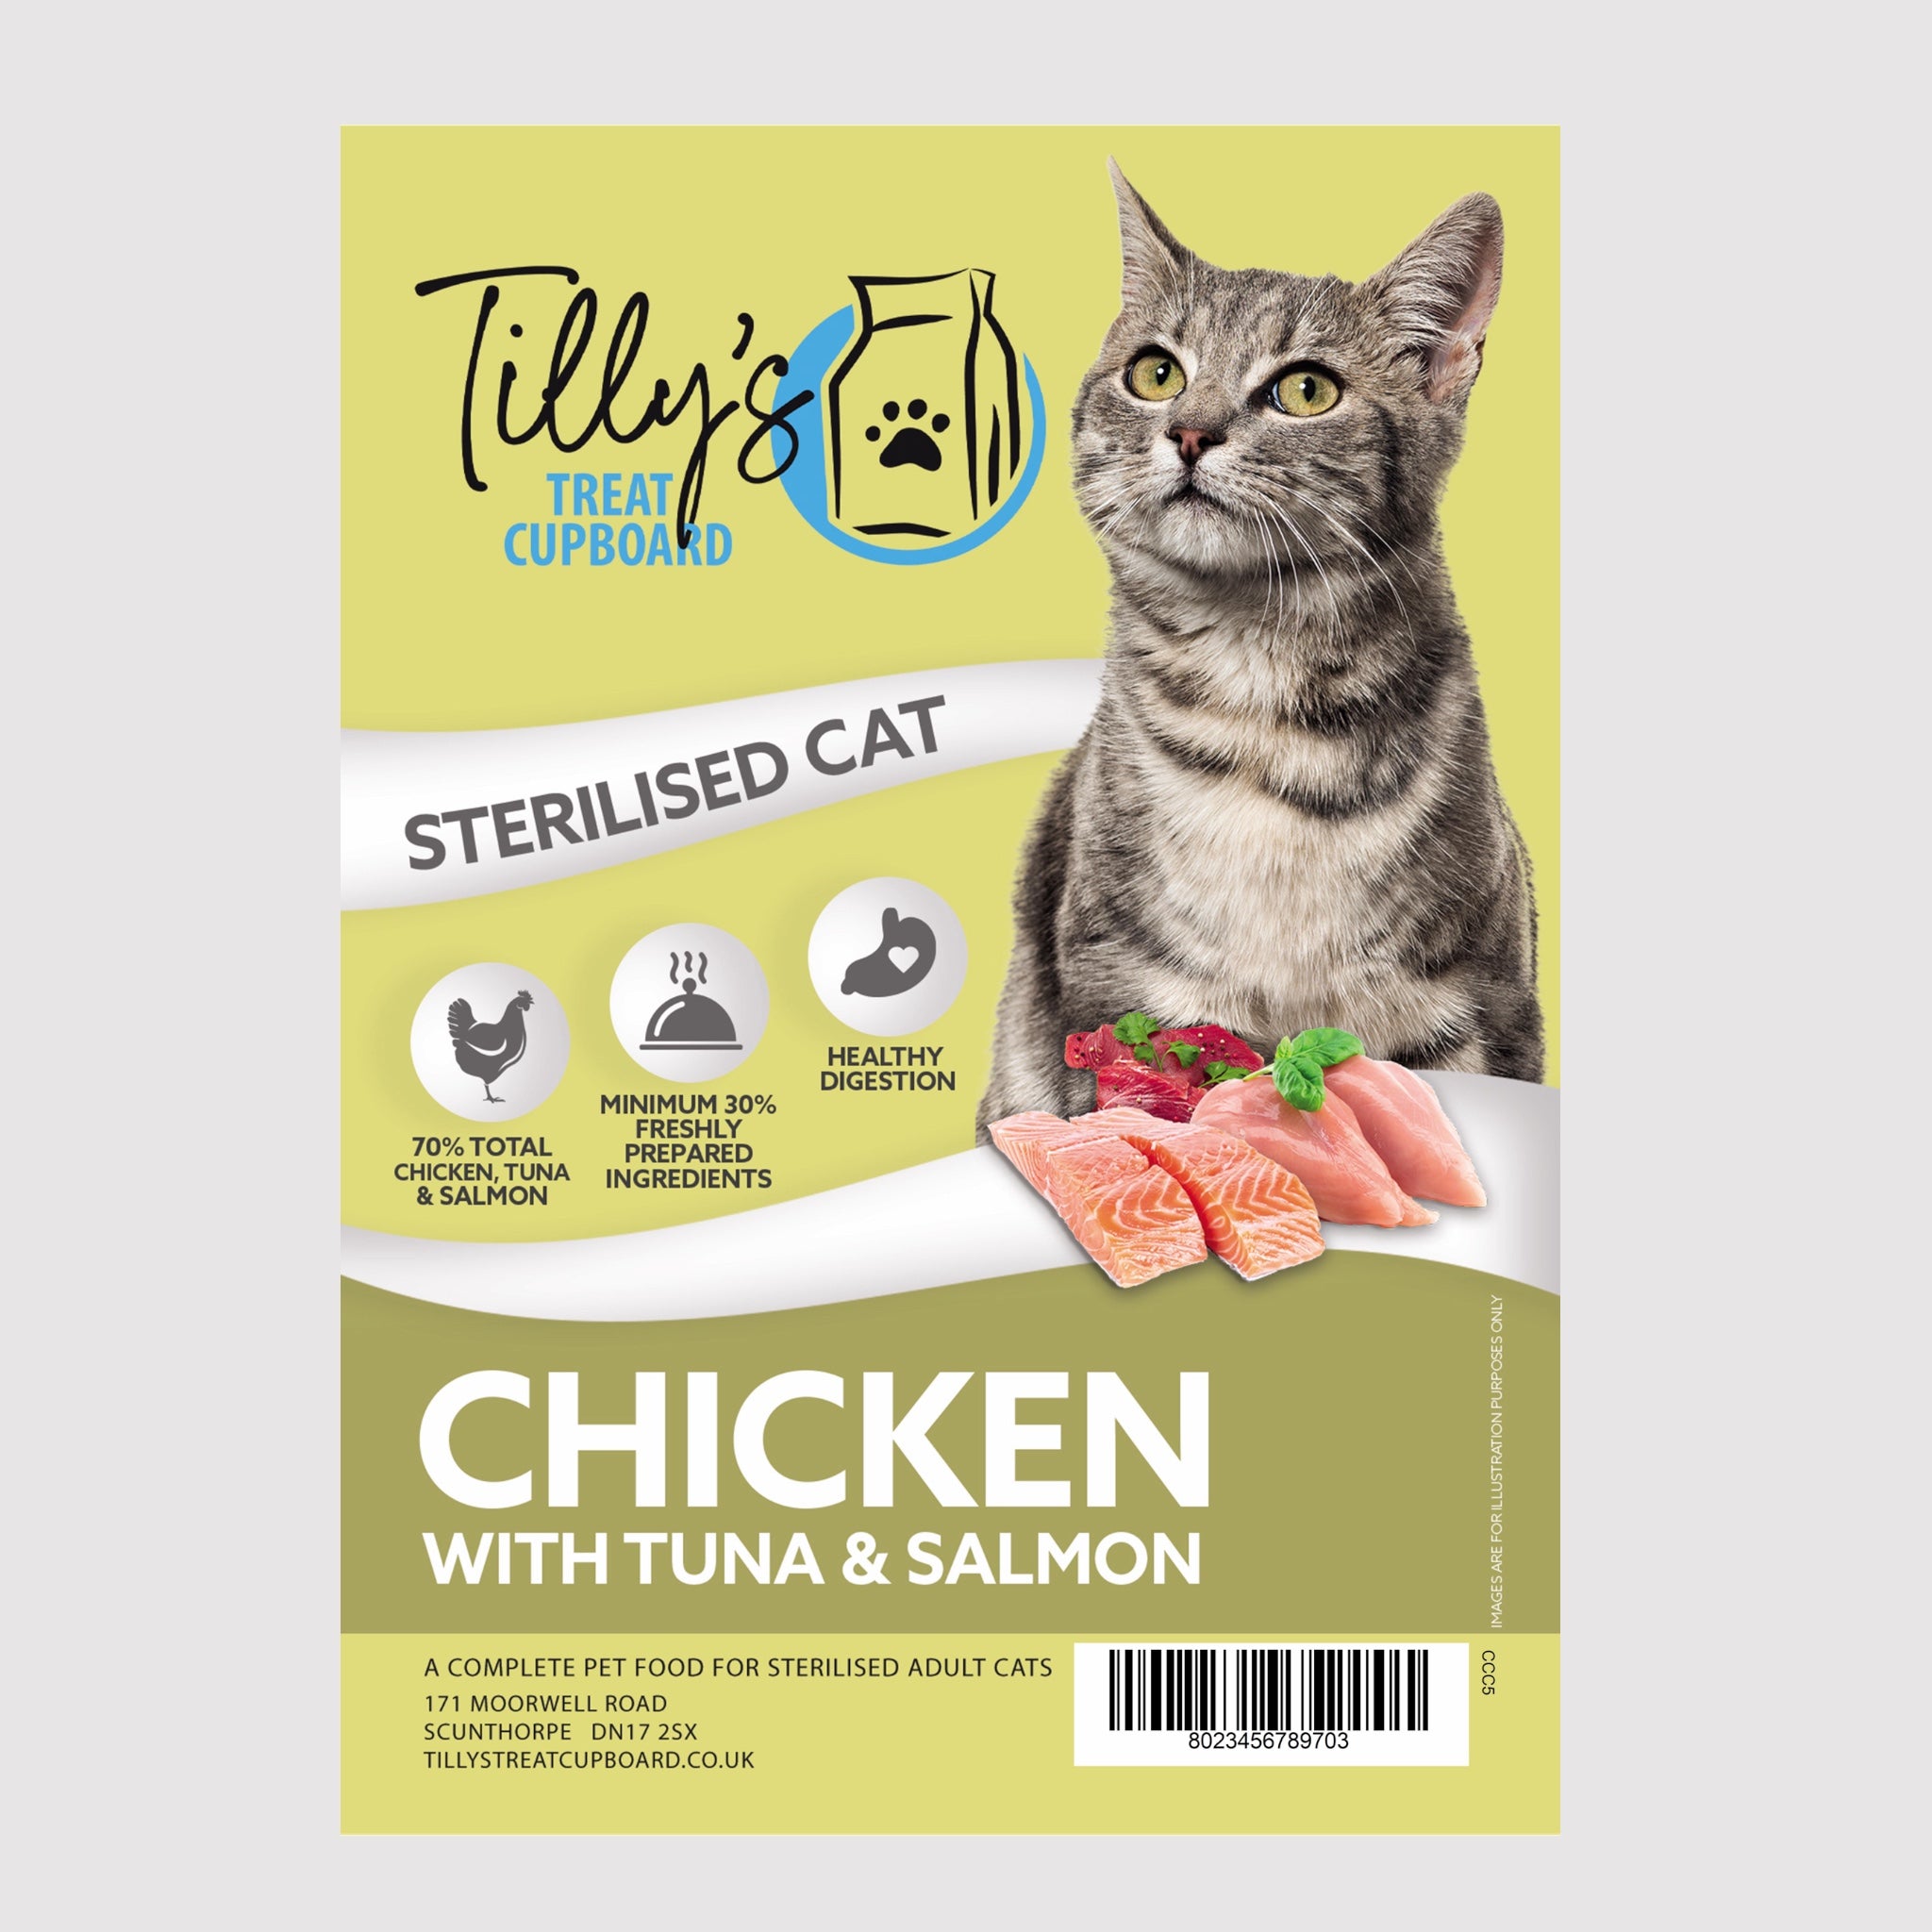 Tilly's Sterilised Cat Chicken, Tuna & Salmon